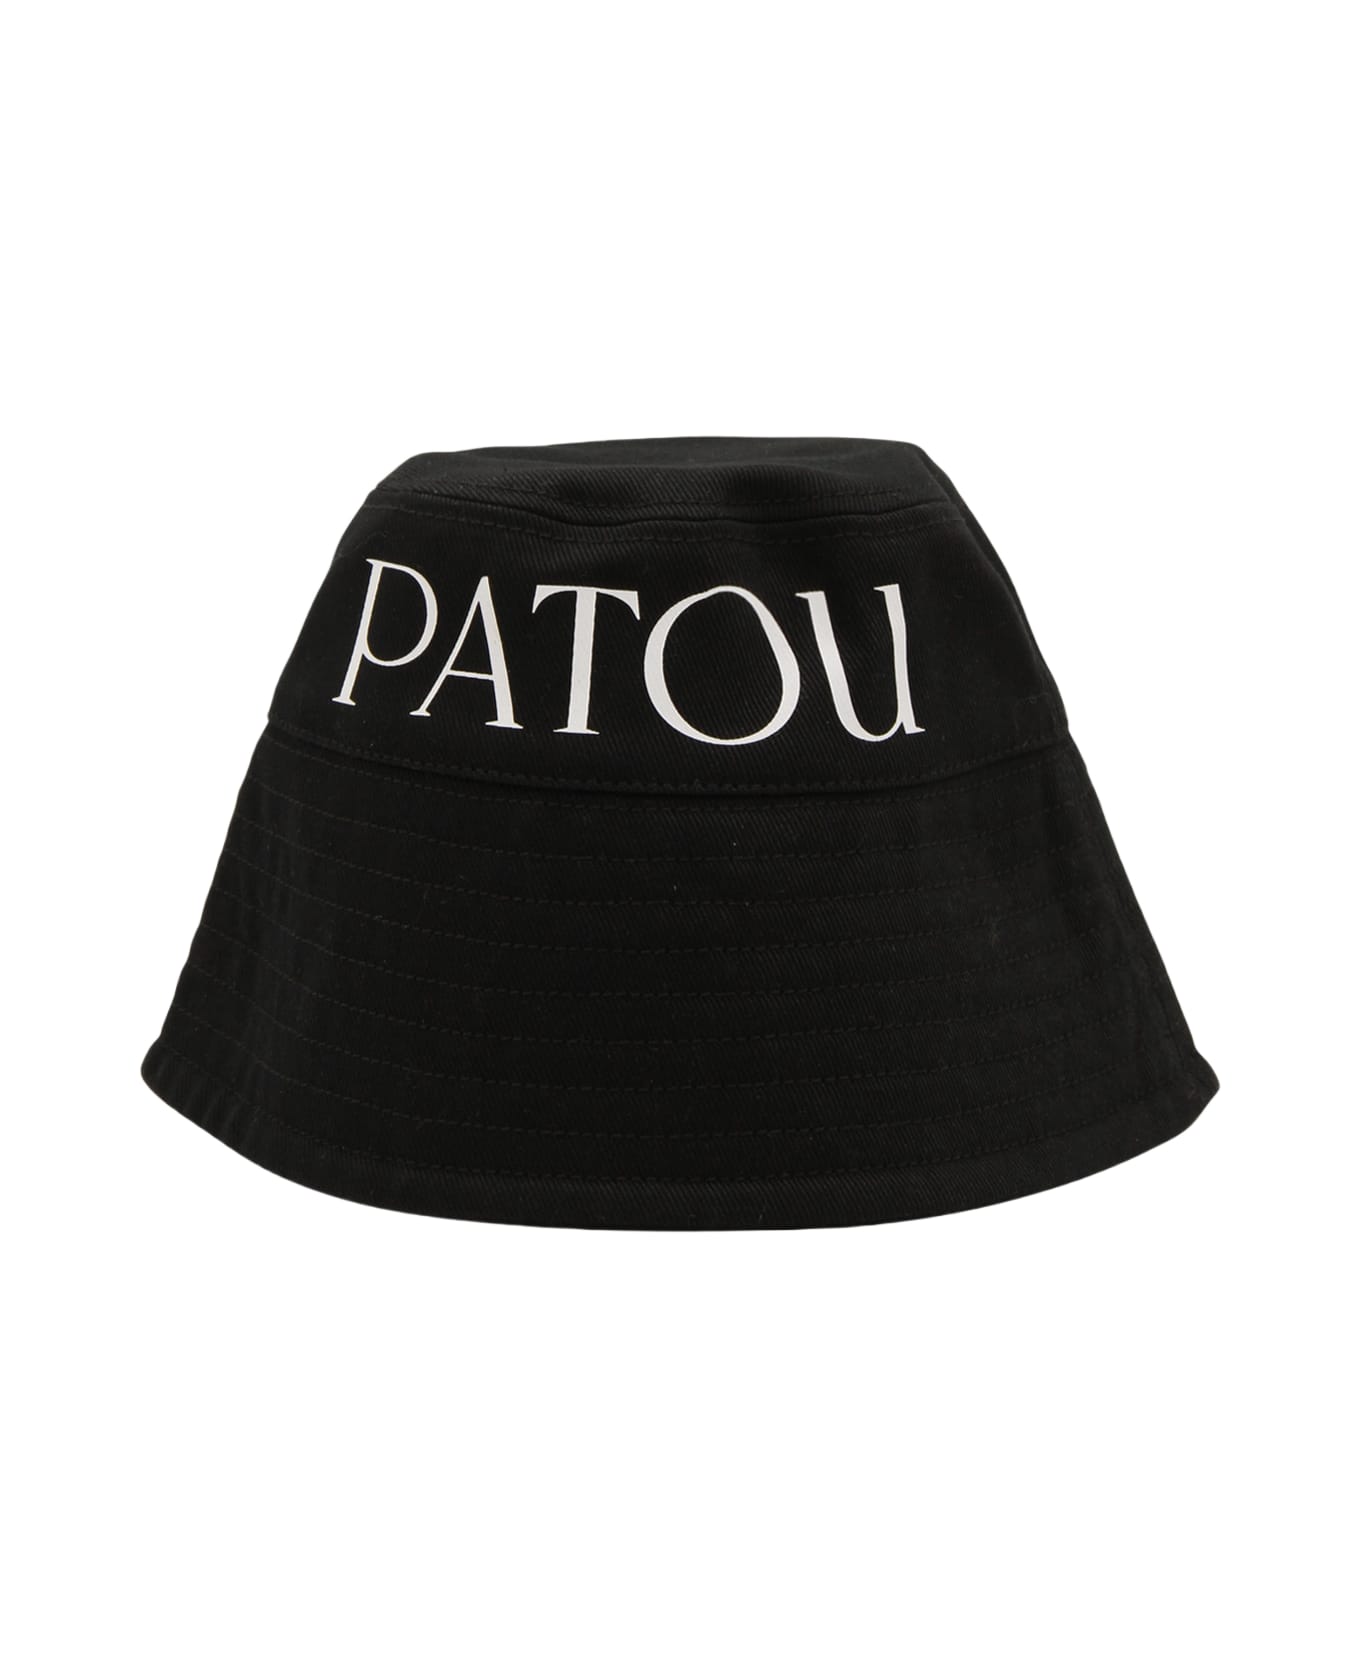 Patou Black And White Cotton Bucket Hat - Black